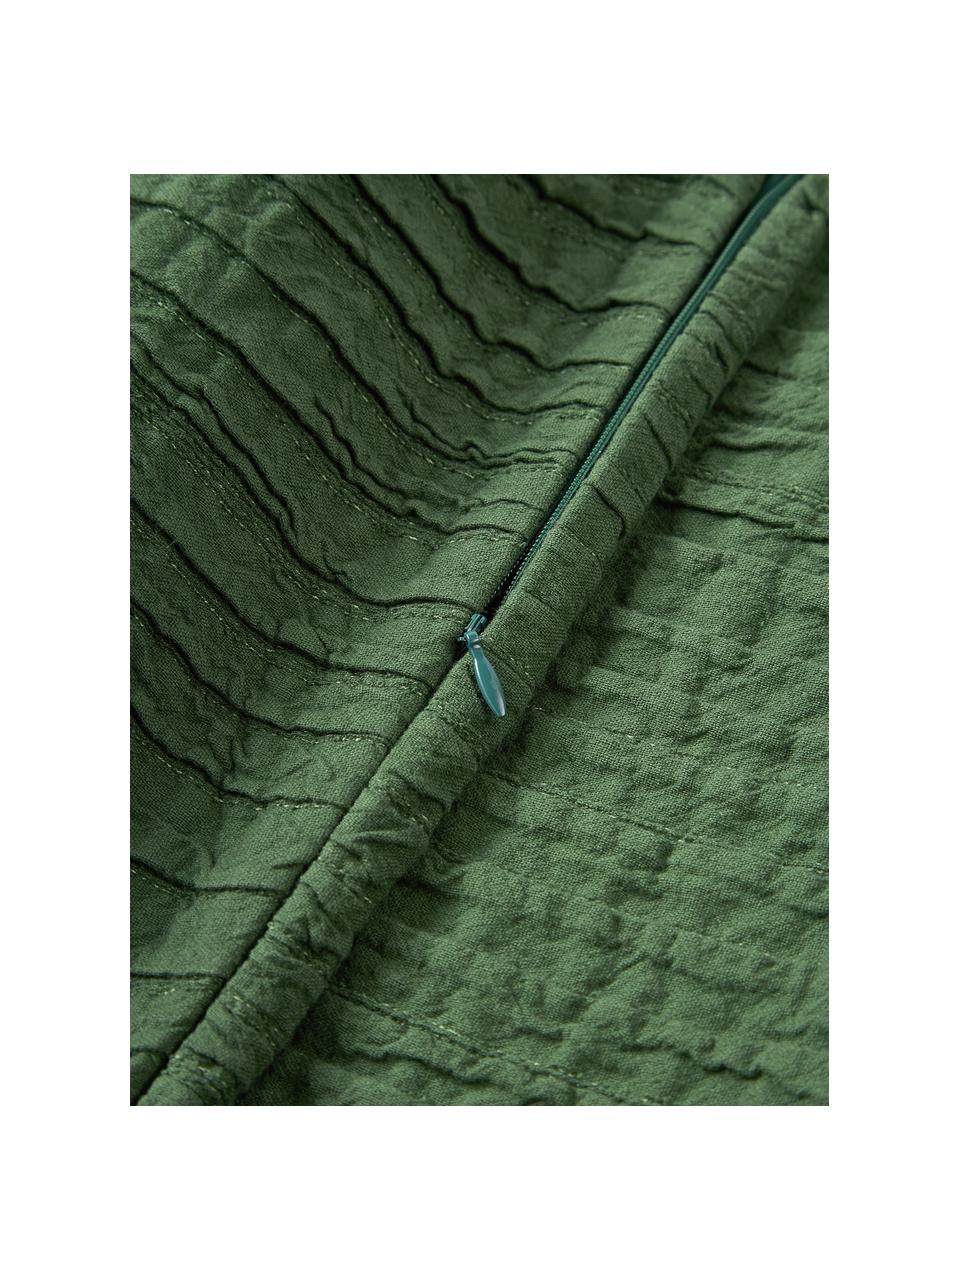 Plissierte Baumwoll-Kissenhülle Artemis, 99 % Baumwolle, 1 % Polyester, Dunkelgrün, B 30 x L 50 cm